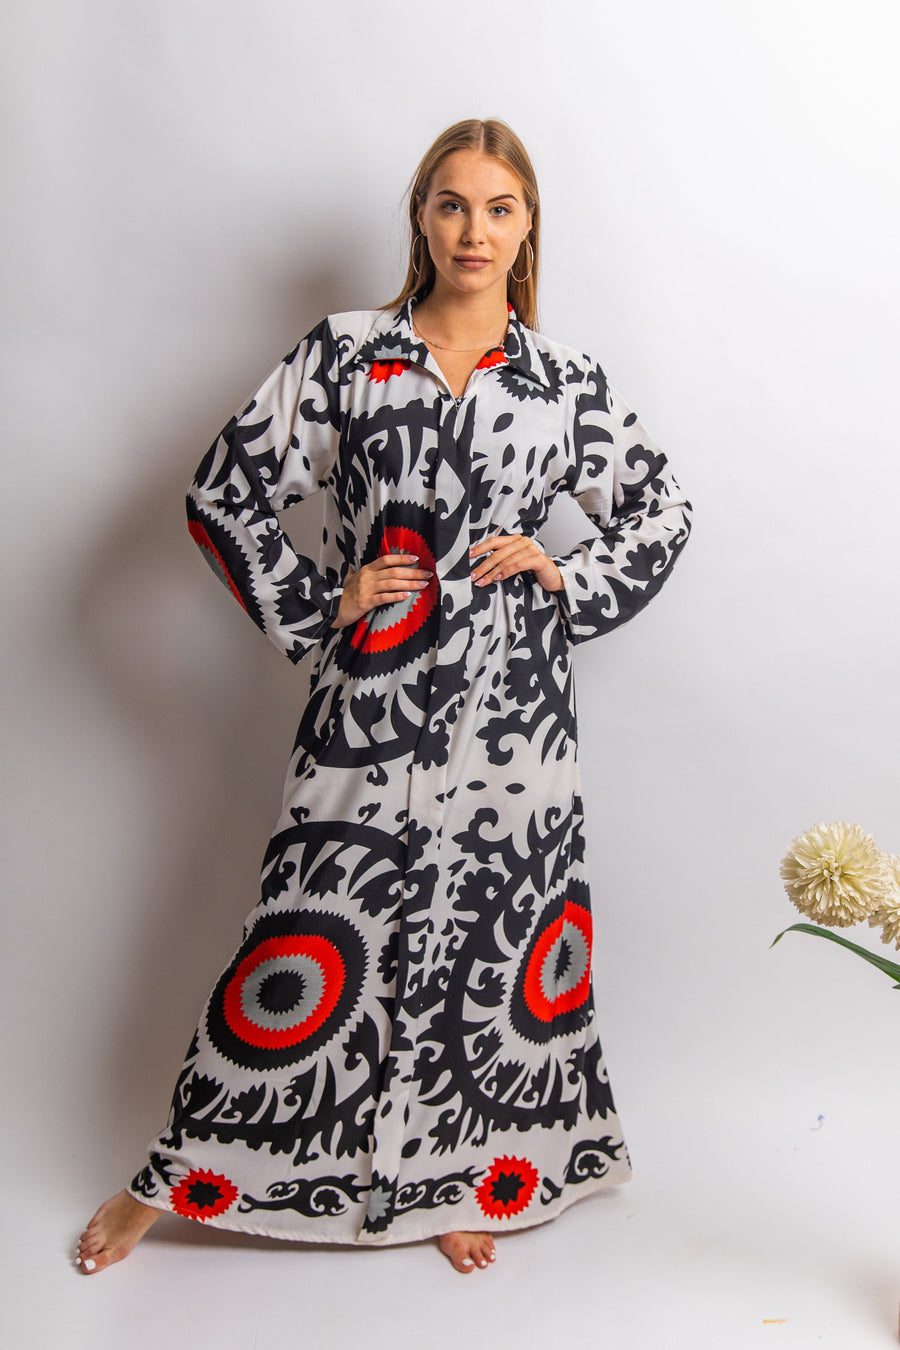 Black/white Bohemian oriental inspired print Kaftan dress, Elegant colorful boho dress, Egyptian cotton. Free size S to 2XL